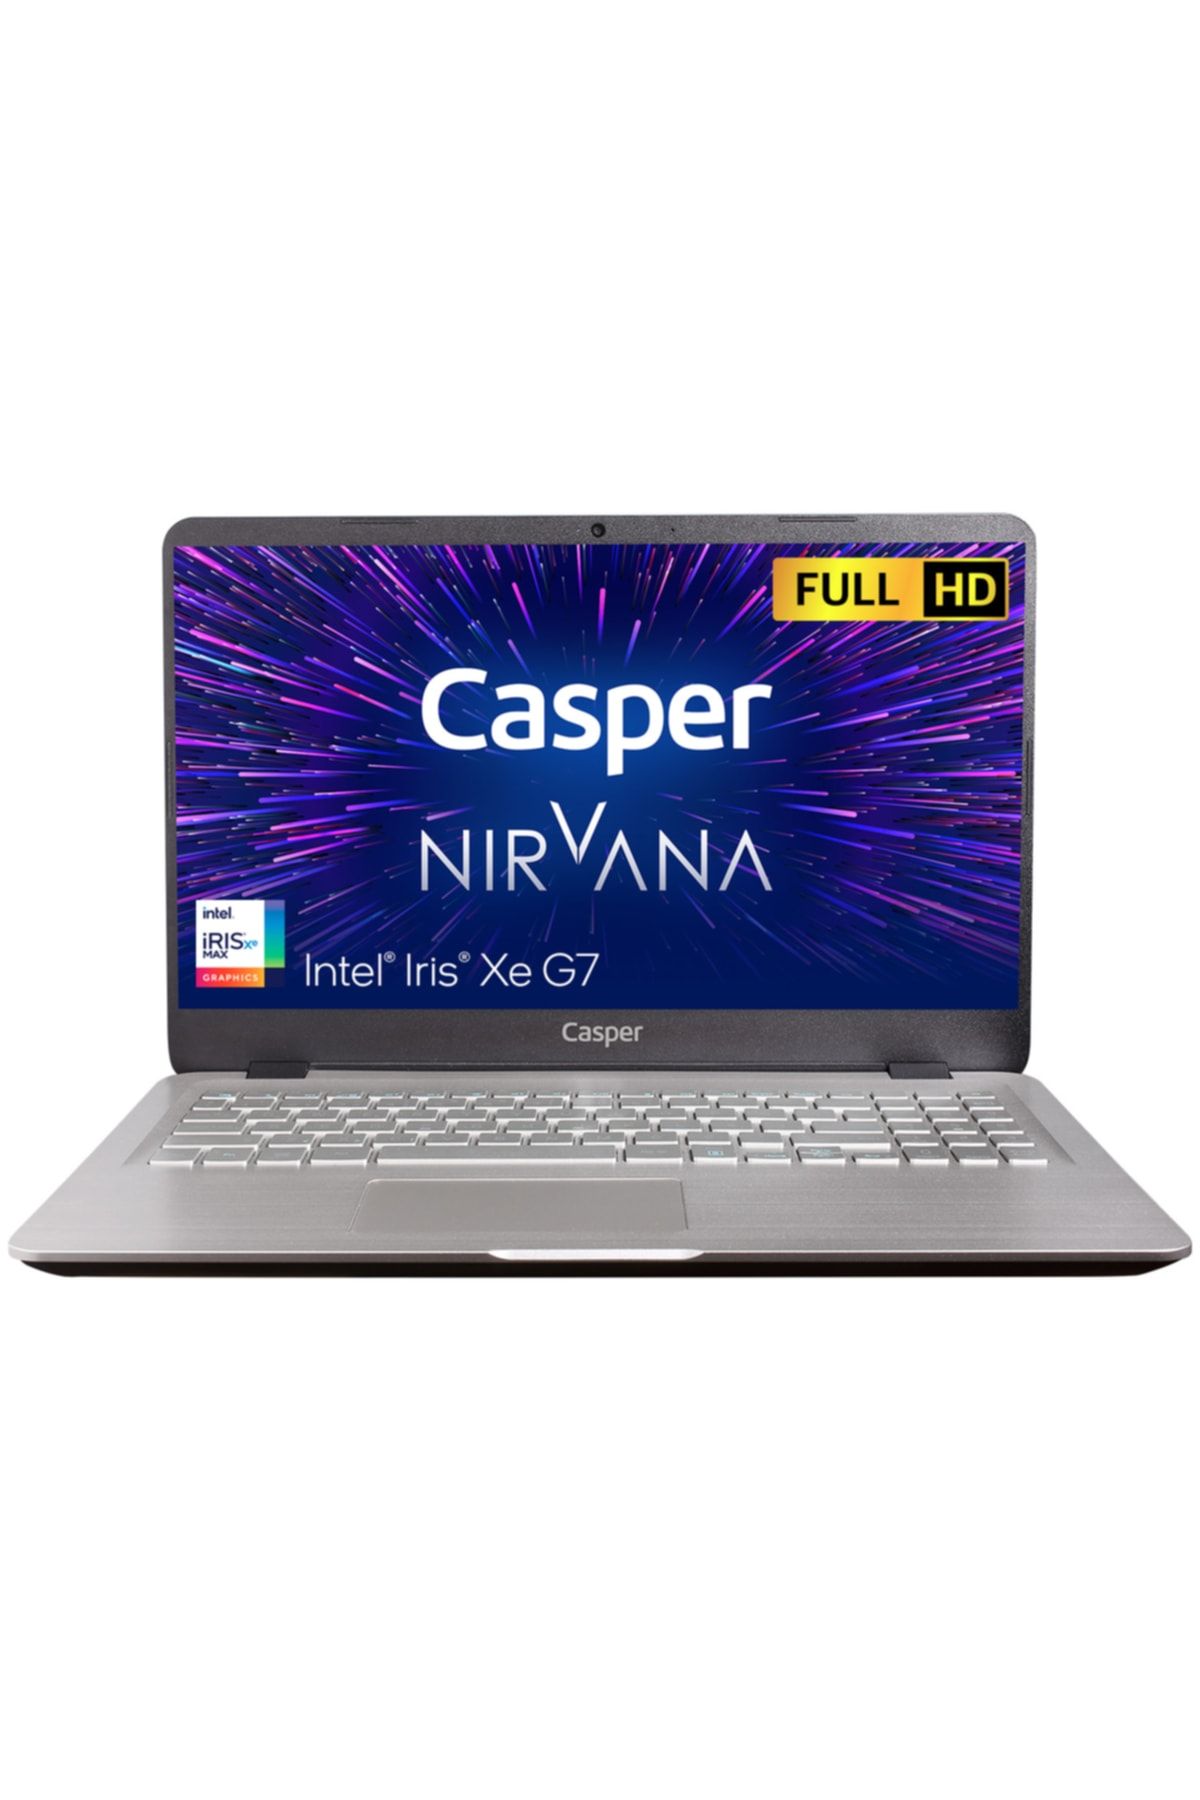 Casper Nirvana S500.1165-bv00x-g-f Intel 11.nesil I7-1165g7 16gb Ram 500gb Nvme Ssd Freedos